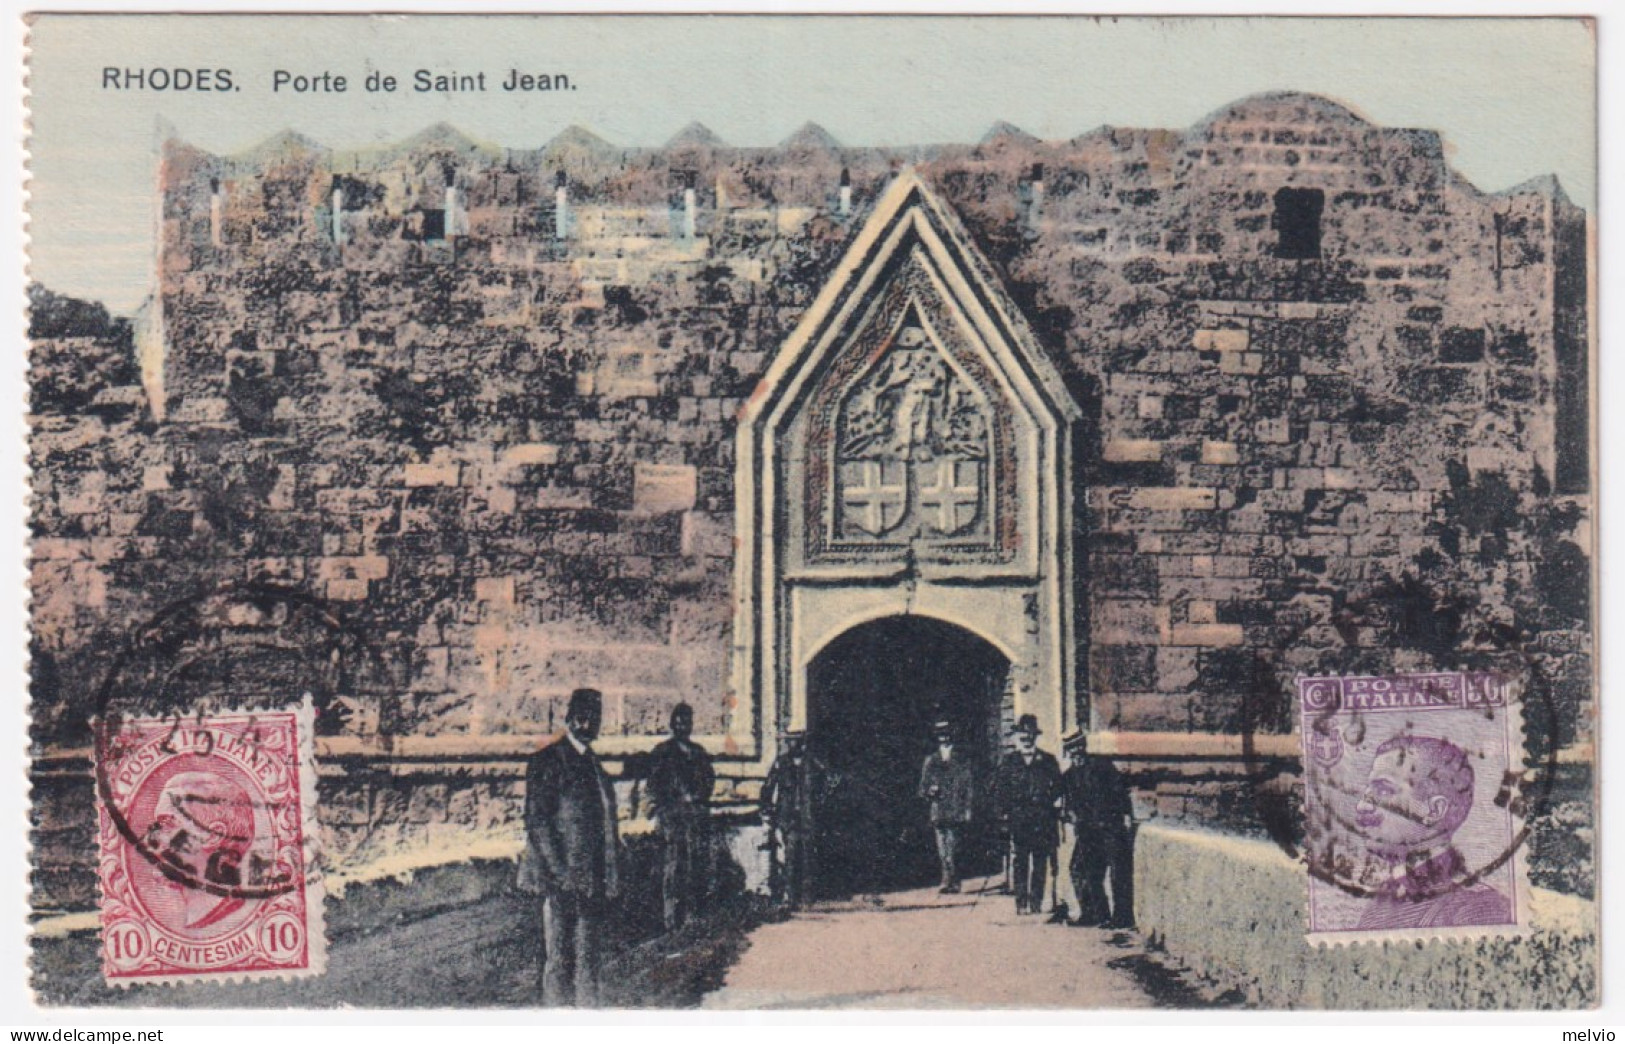 1924-EGEO Regno C.10 E 50 Su Cartolina (Rhodes Porta De Saint Jean) Affrancata L - Aegean (Rodi)